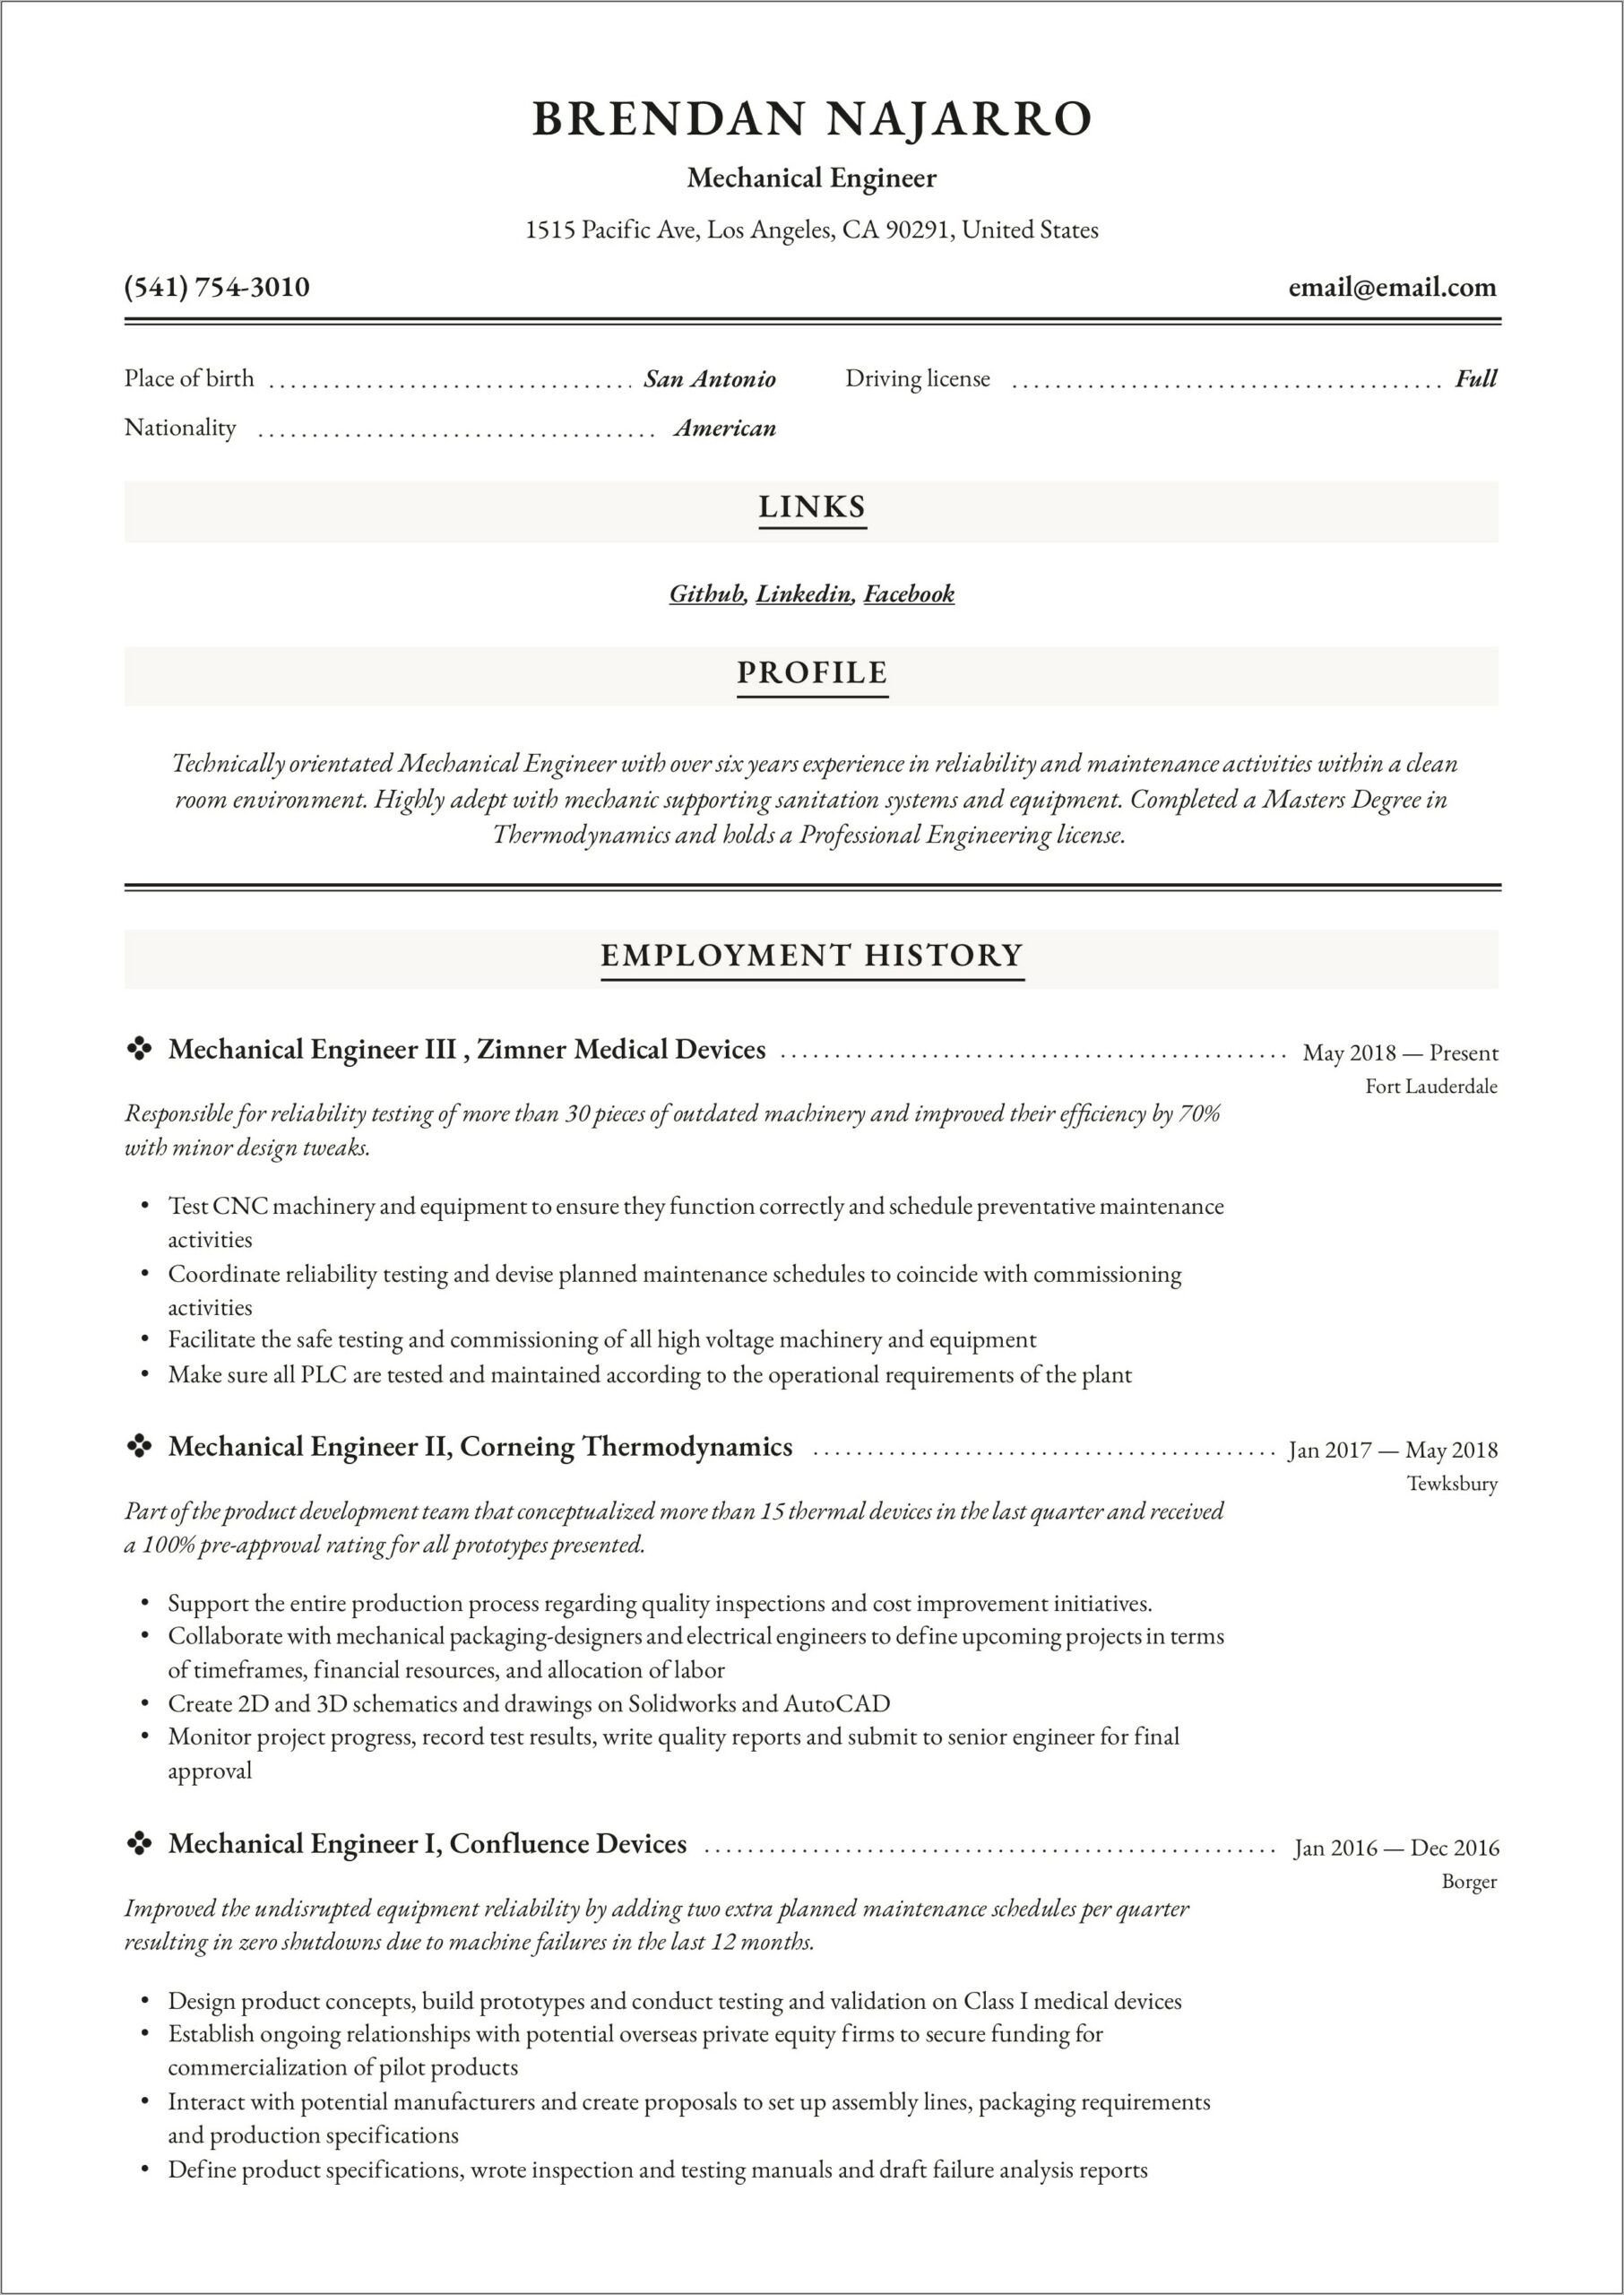 Sample Resume For Automotive Design Engineer